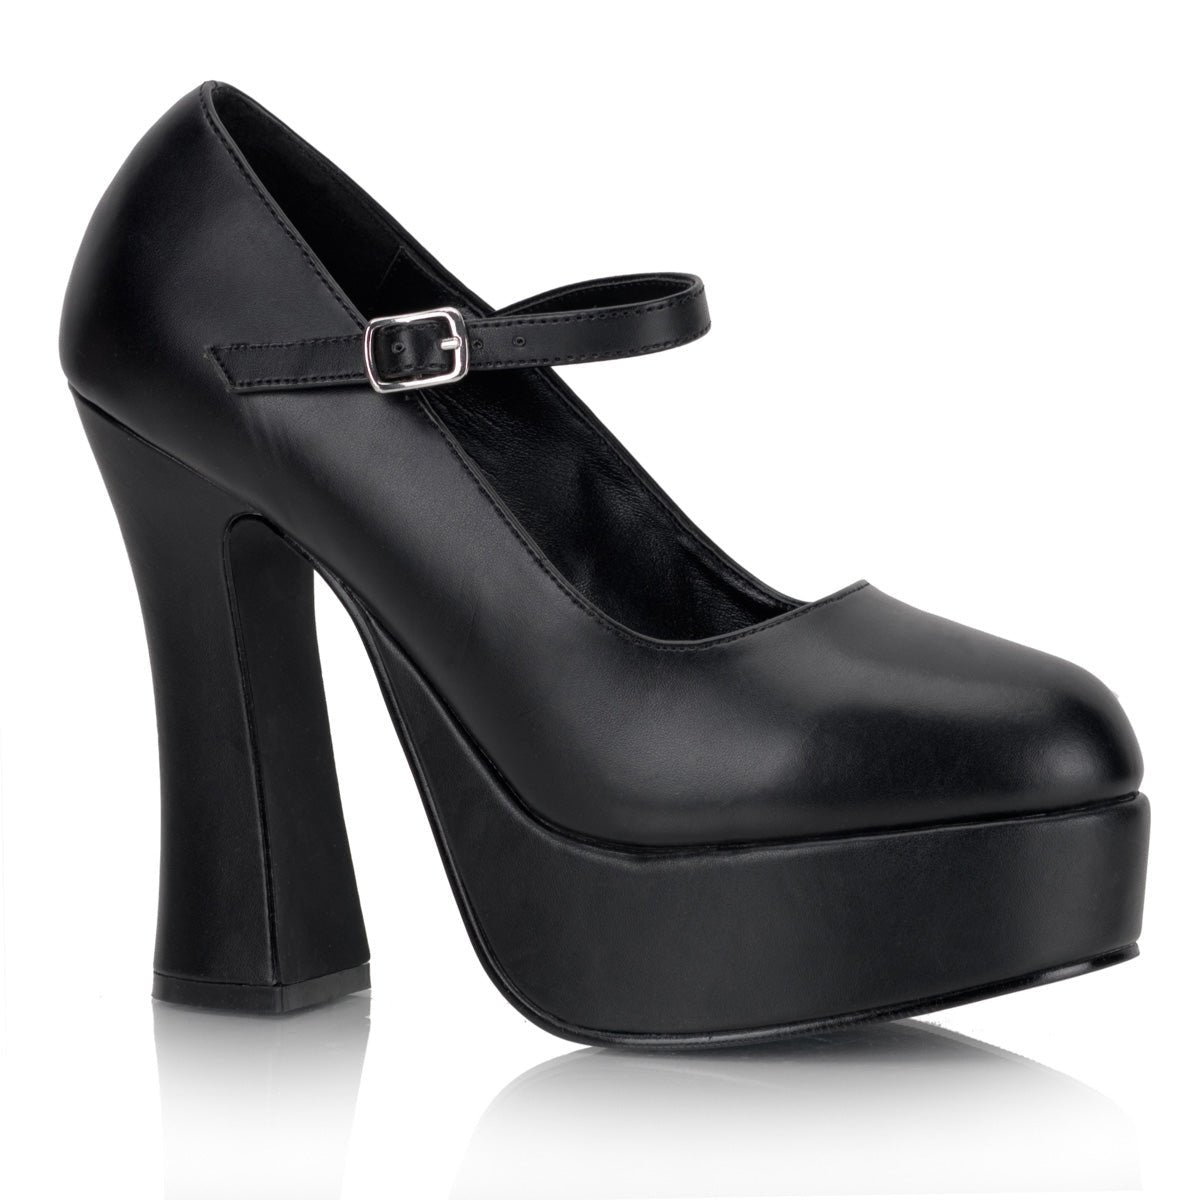 Demonia 5-6 Inch Heels Buy Online from Alternative Footwear